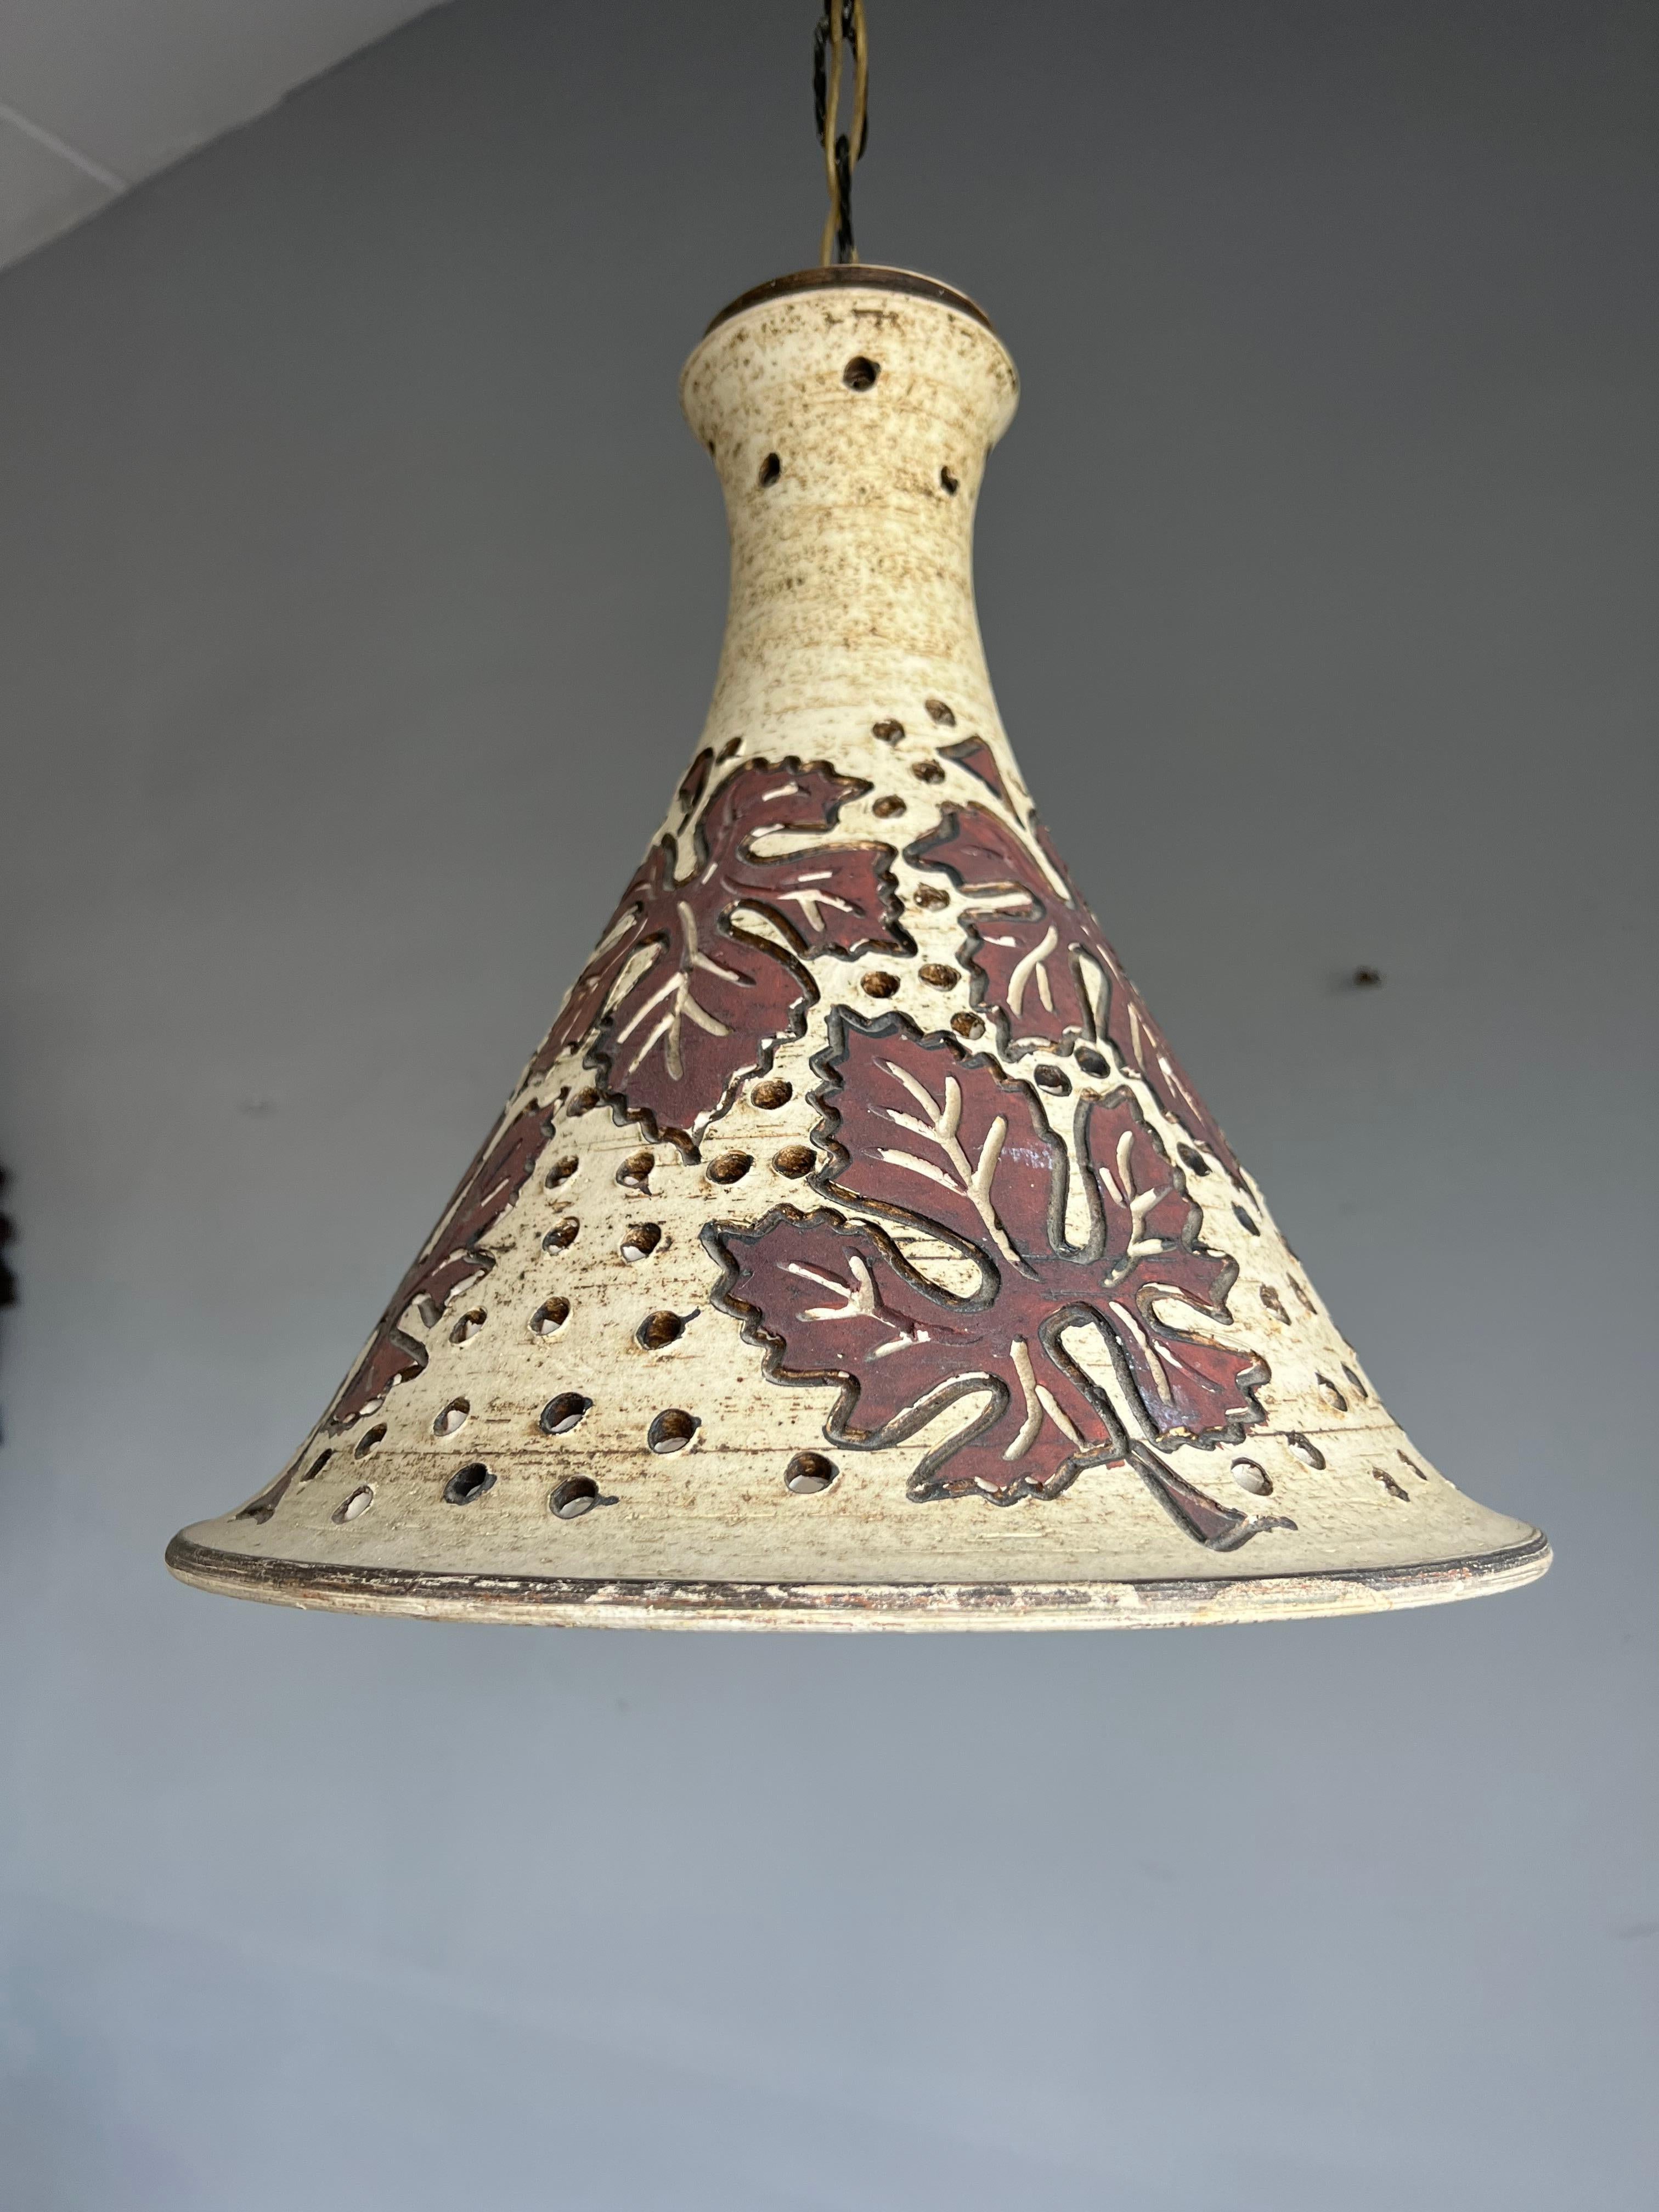 Unique Handcrafted Danish Ceramic Pendant Jette Hellerøe Light Fixture, 1970s For Sale 11